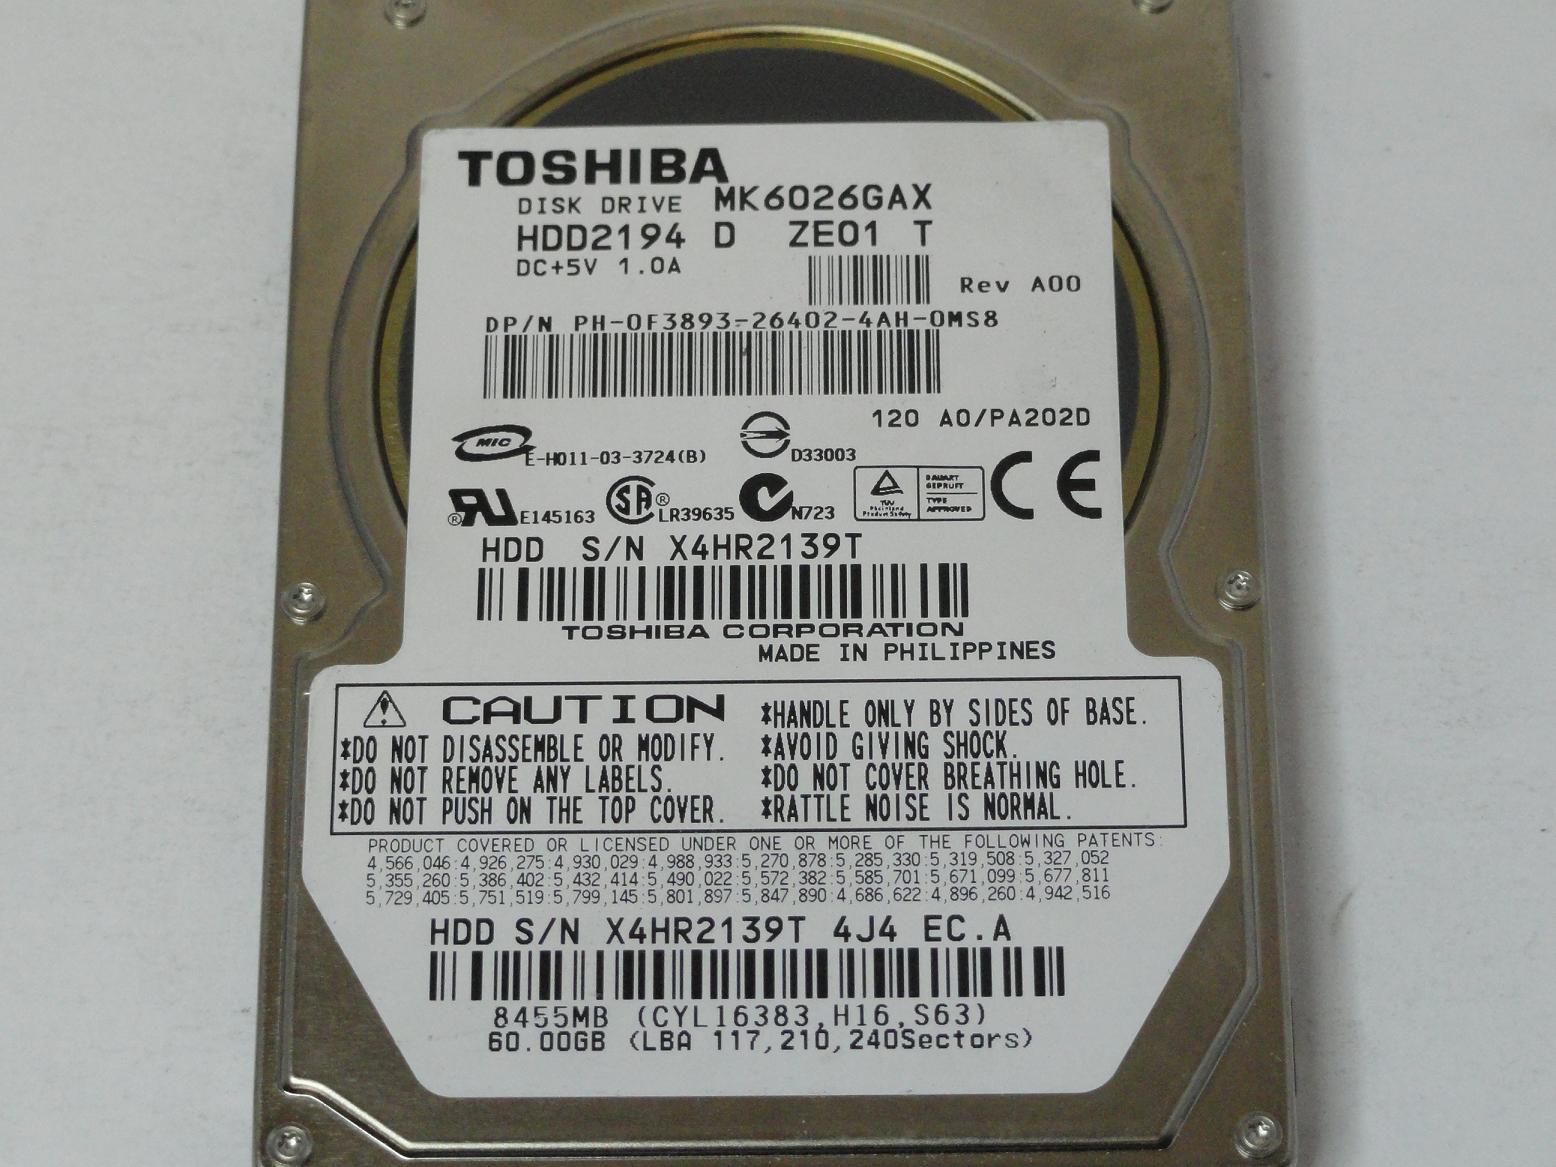 PR12093_HDD2194_Toshiba Dell 60GB IDE 5400rpm 2.5in HDD - Image3